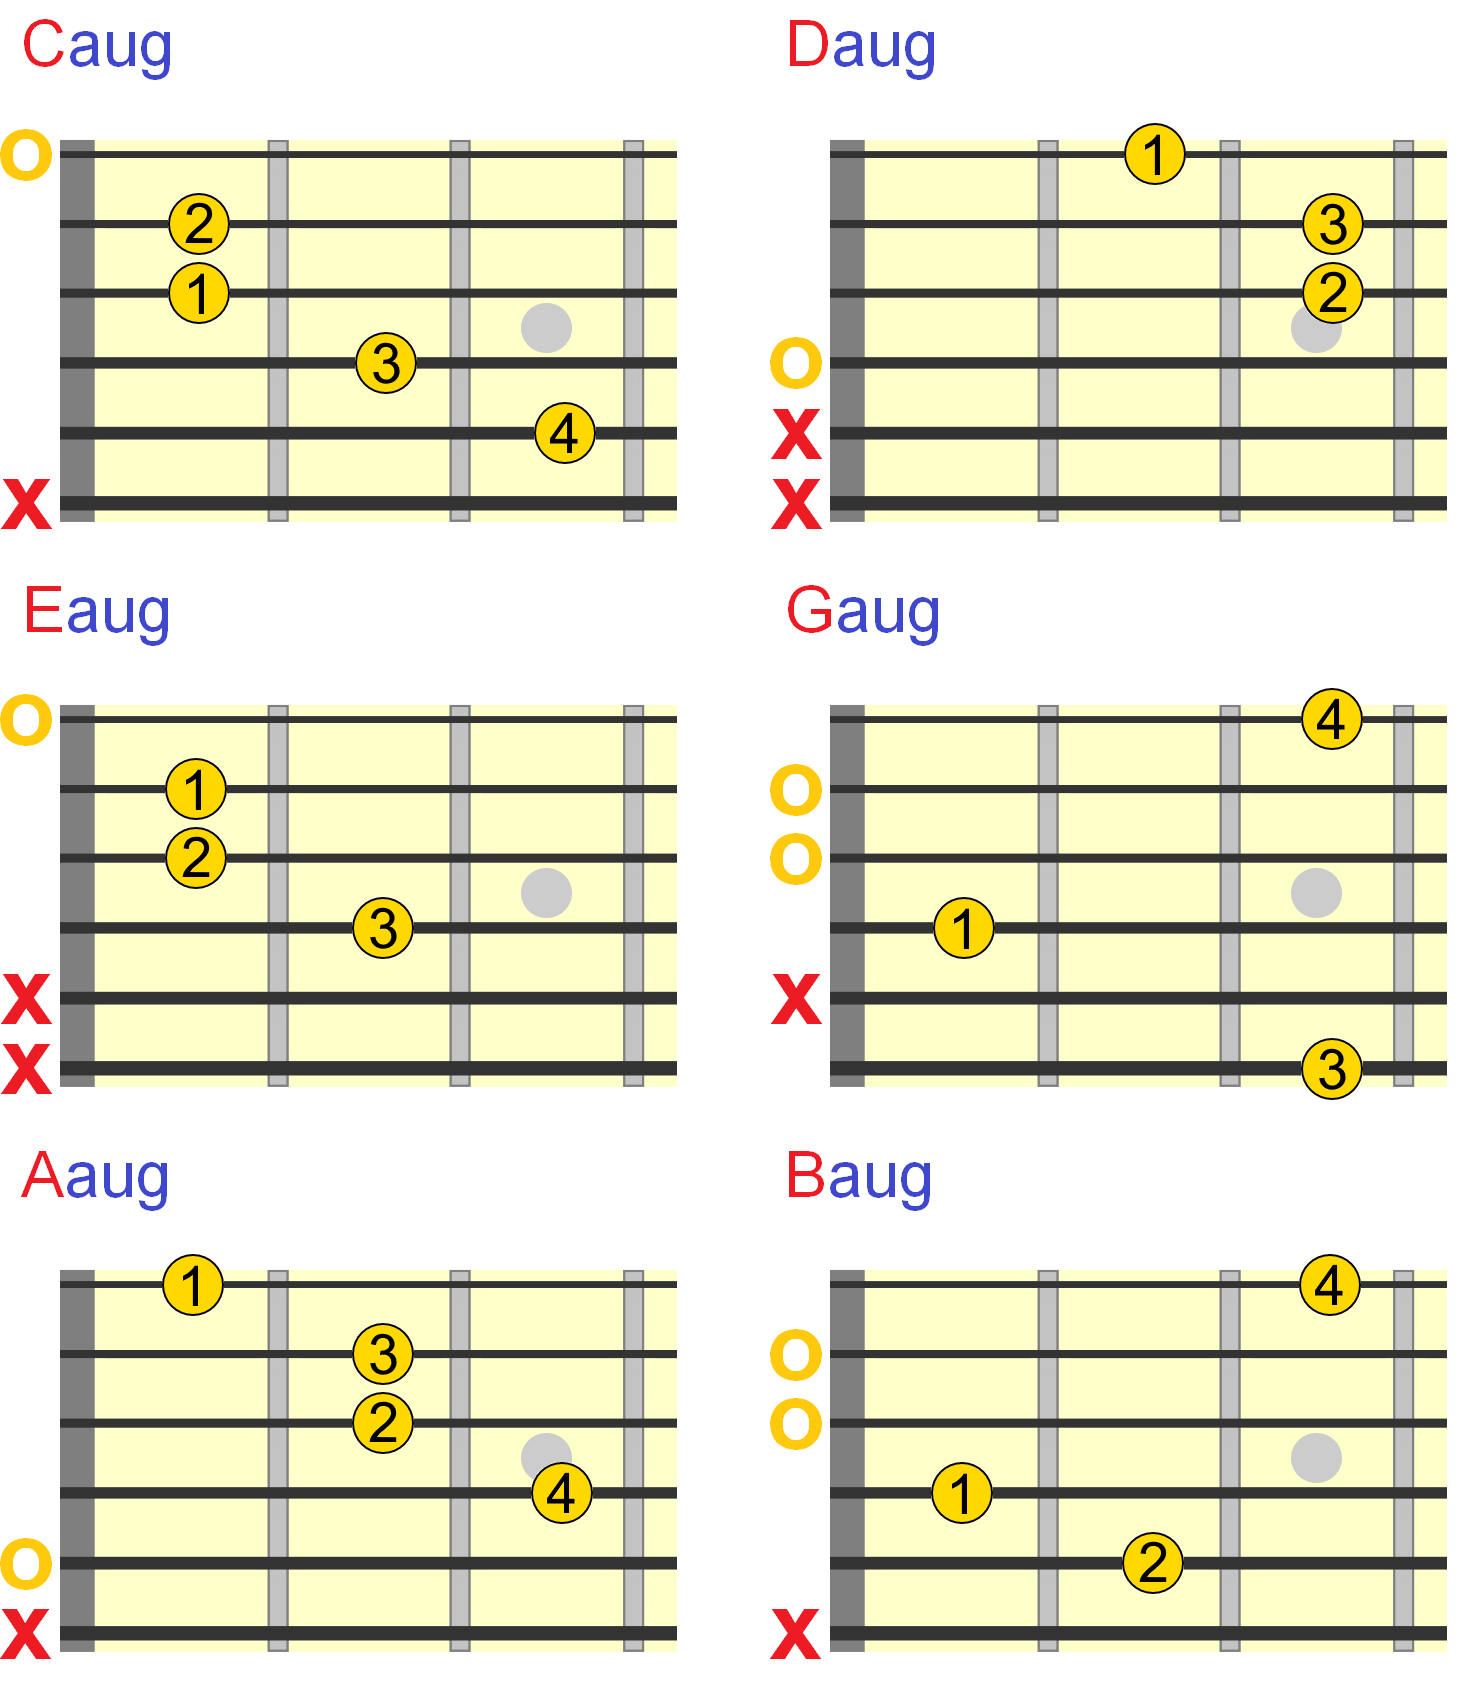 Augmented Chords Guitar Chart